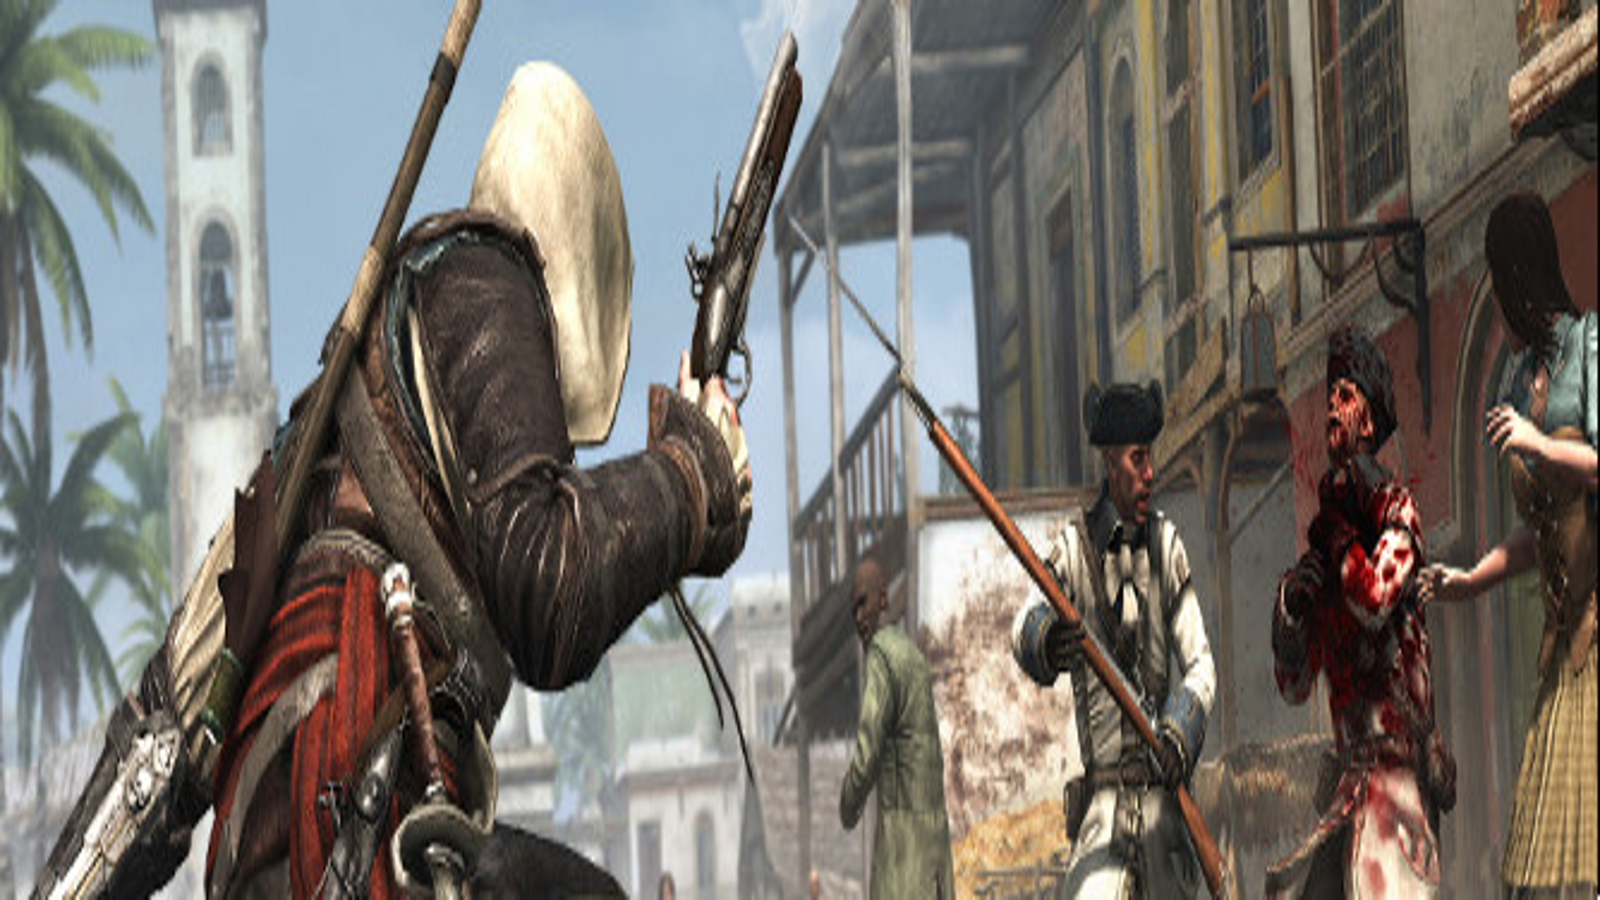 New Call od Duty multiplayer reveal trailer show us the Blackbeard